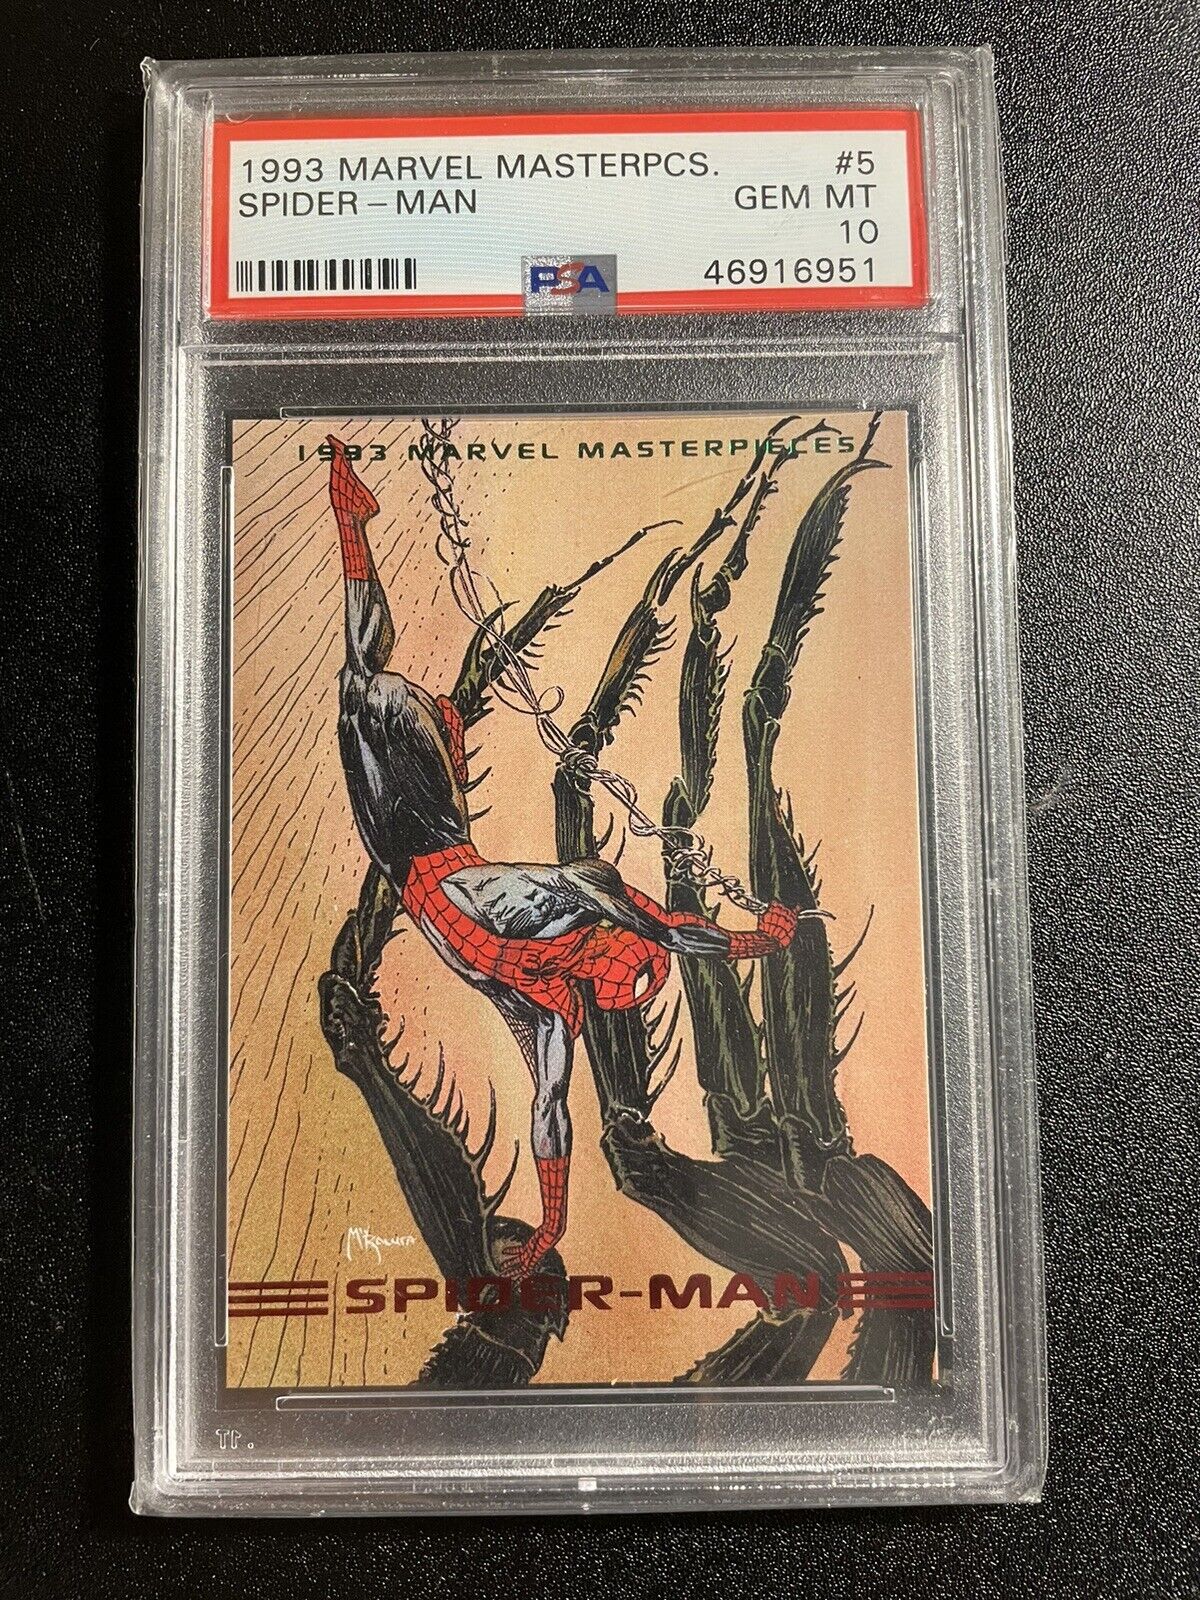 1993 Marvel Masterpieces Spider-Man #5 PSA 10 GEM MINT